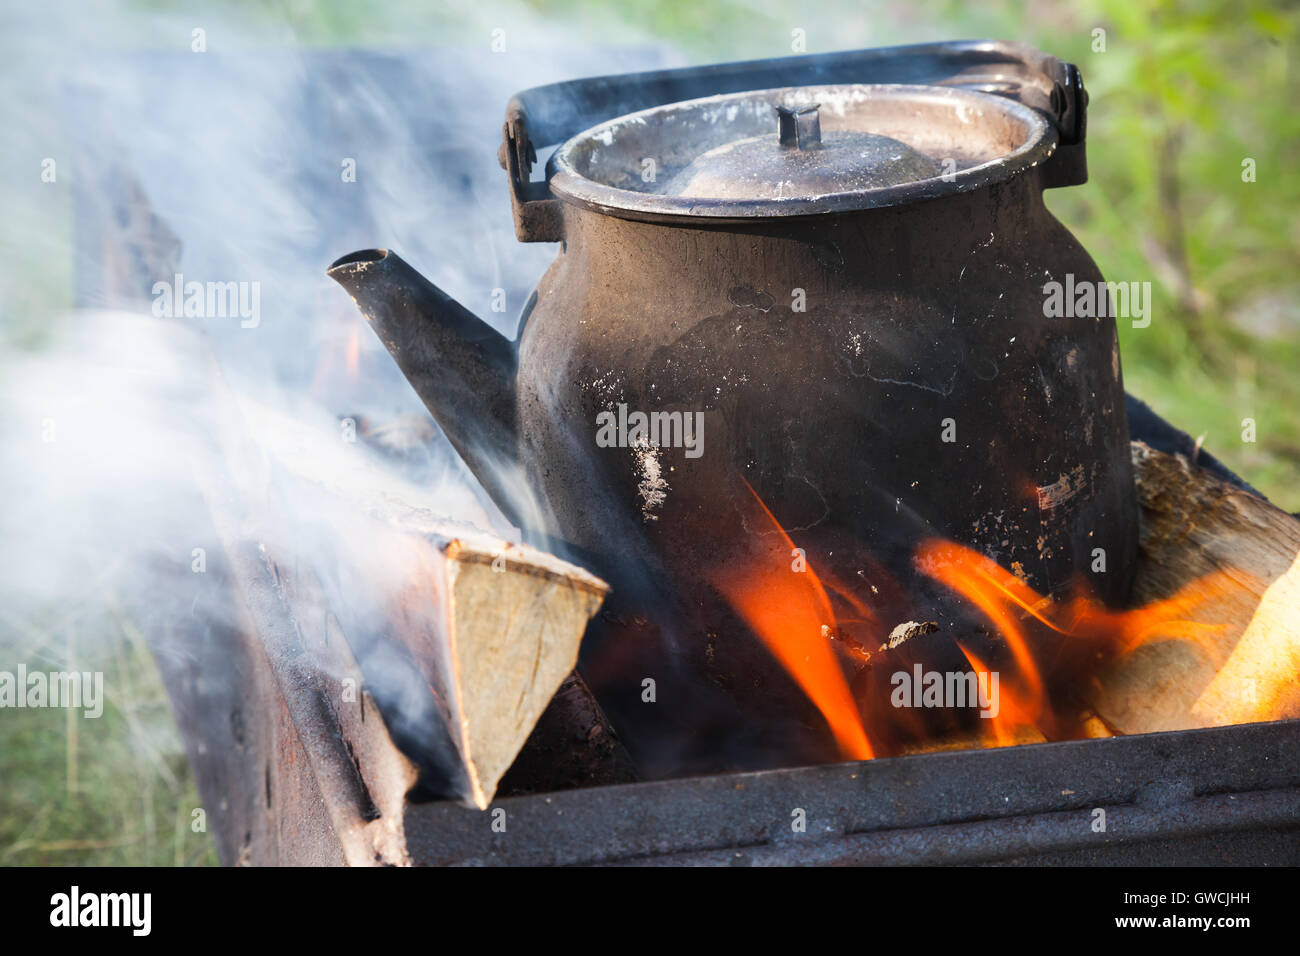 https://c8.alamy.com/comp/GWCJHH/old-used-black-boiling-teapot-on-bonfire-GWCJHH.jpg